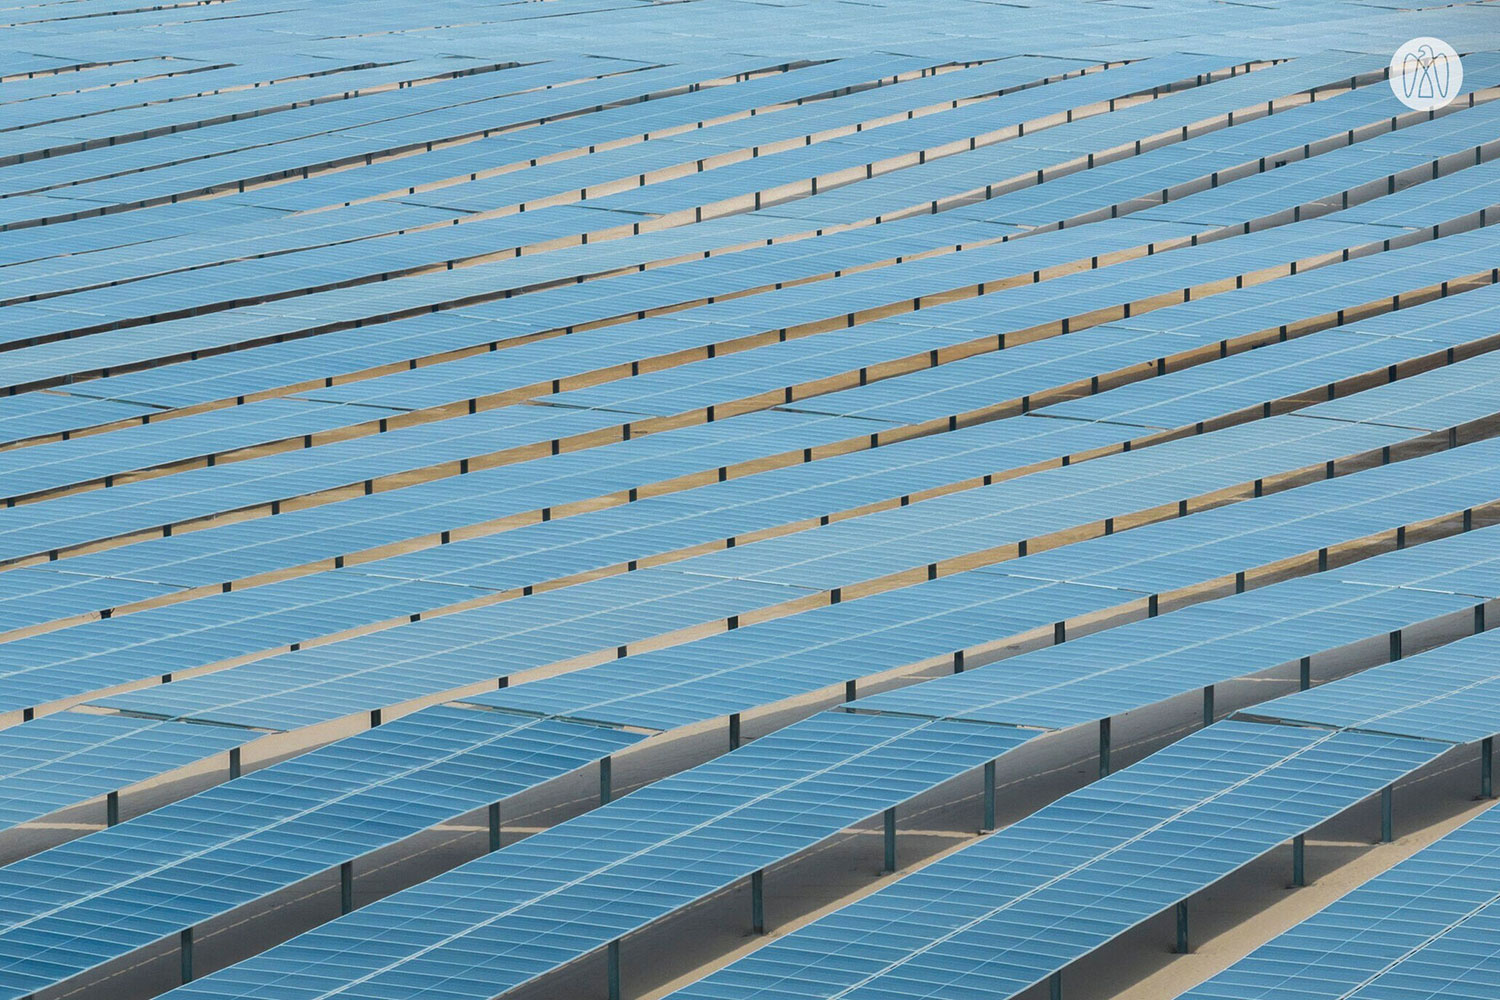 2GW Al Dhafra Photovoltaic Solar Plant.